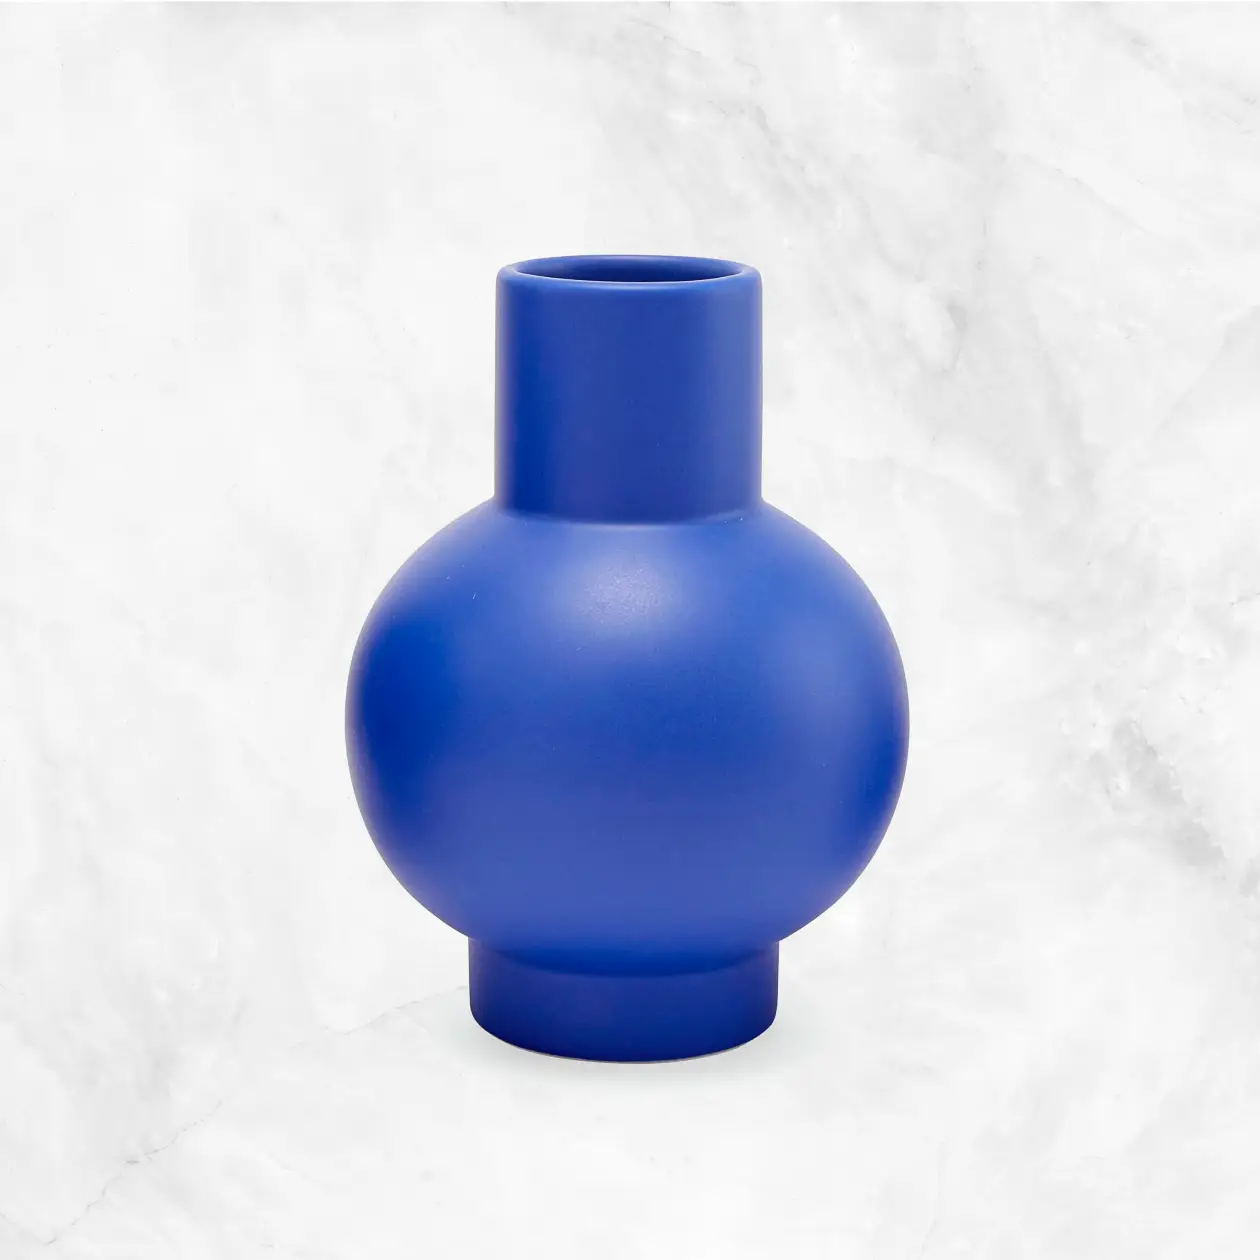 Nicholai Wiig-Hansen - Strøm Vase  - Blue Delivery